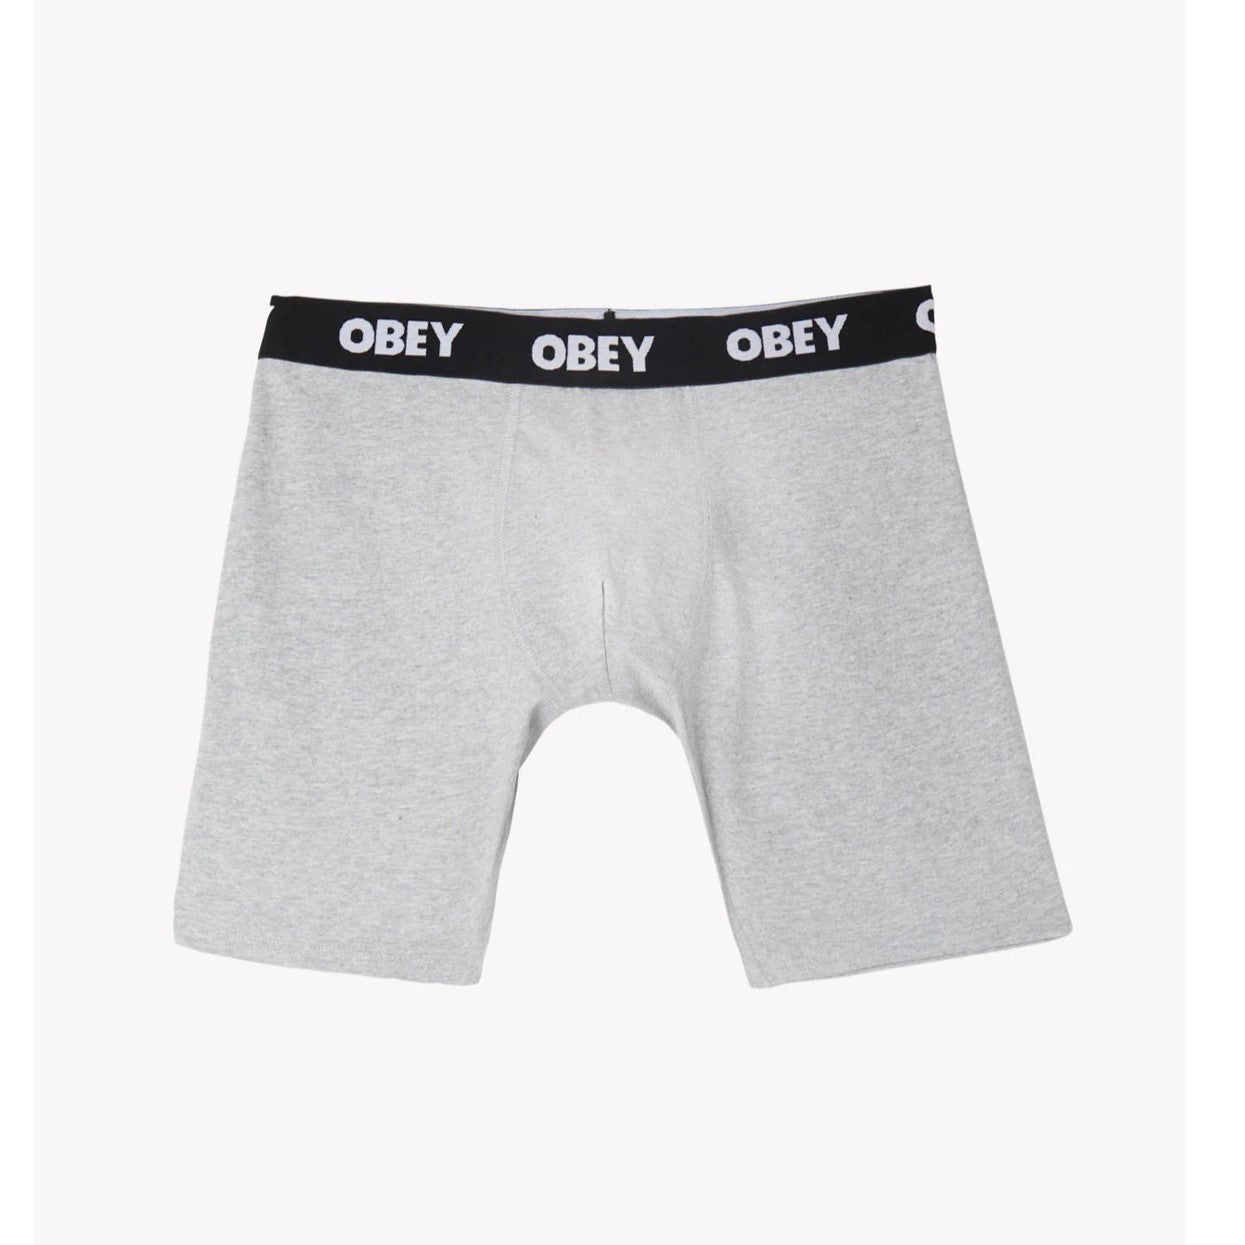 Obey Established Work men&#39;s underwear boxer 100090000 grey. Pack of 2 pieces